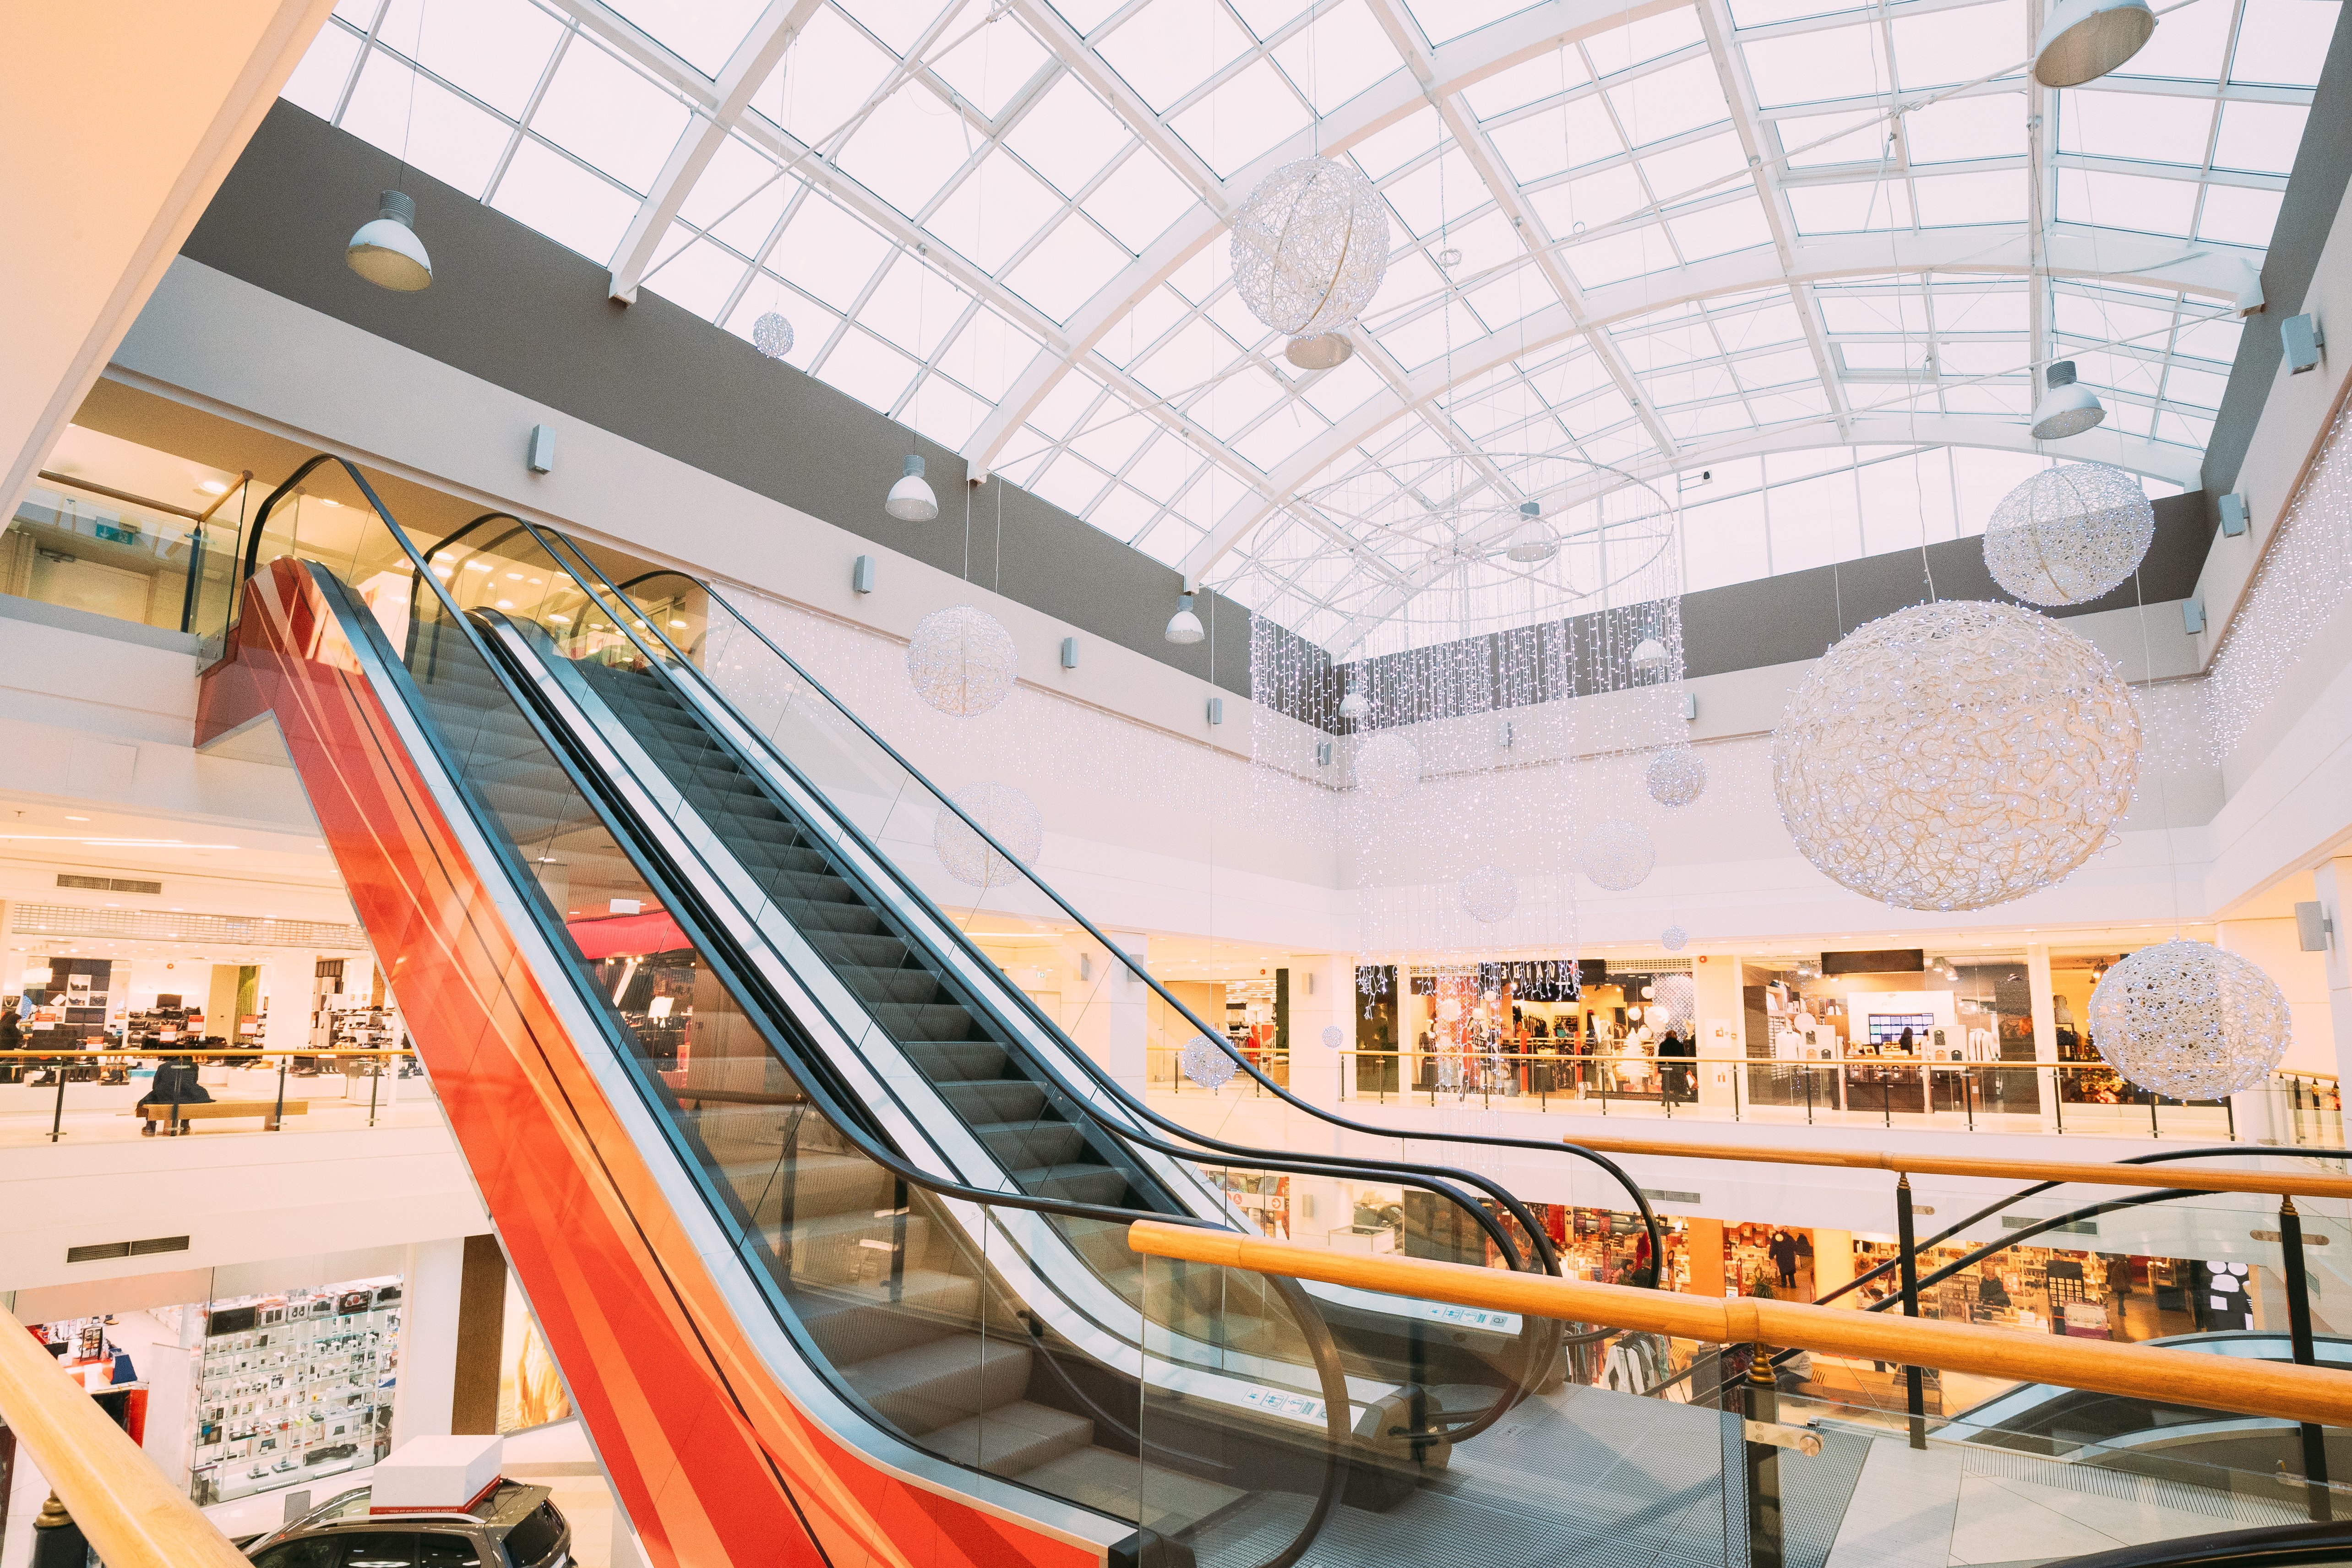 escalator-in-modern-shopping-mall-shopping-centre-2021-09-02-11-07-19-utc